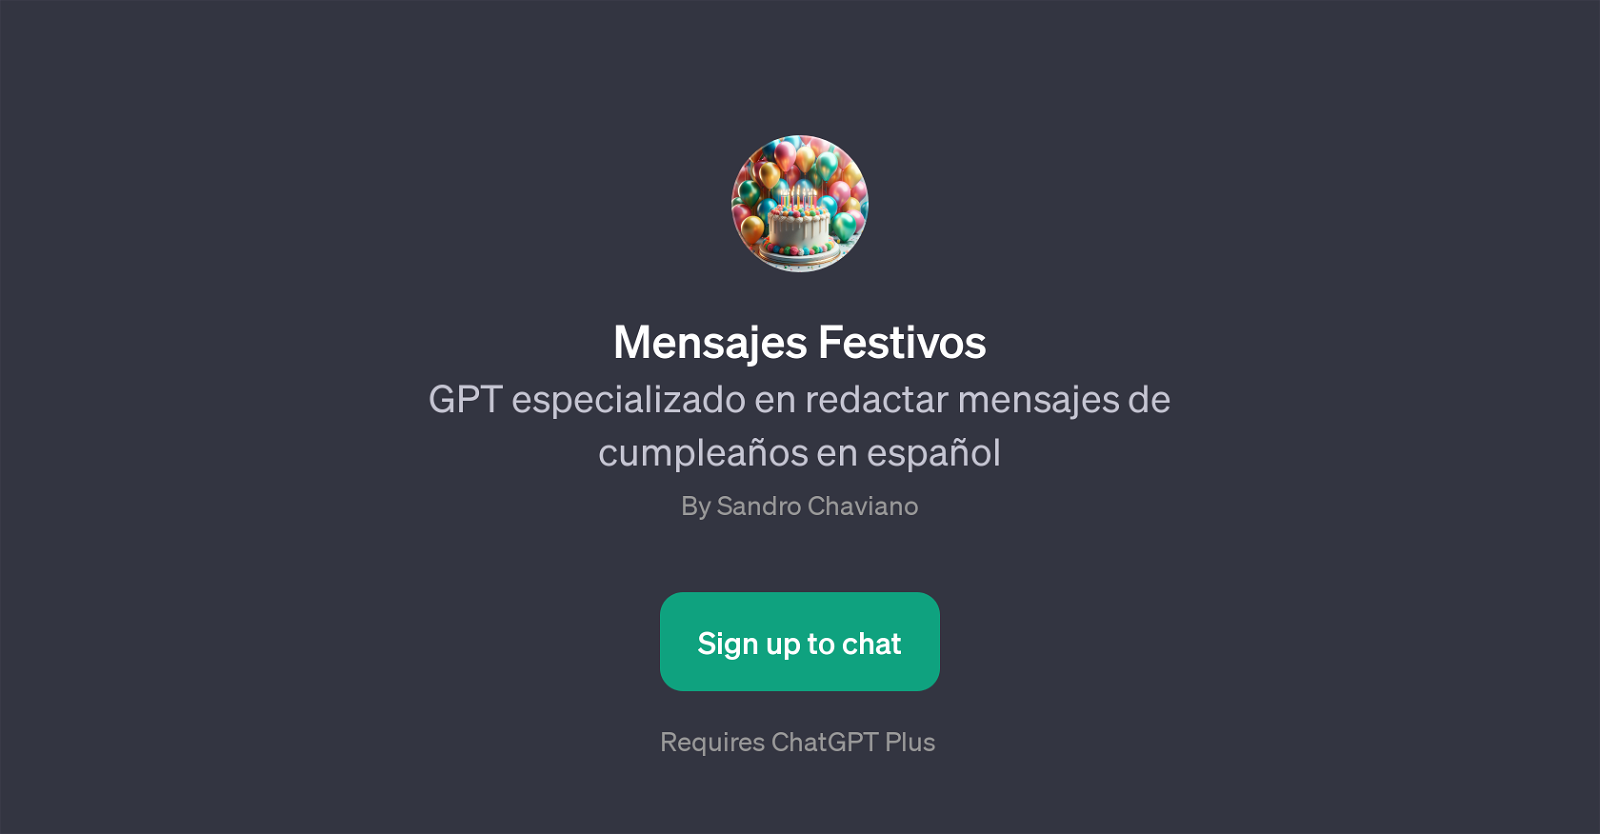 Mensajes Festivos website